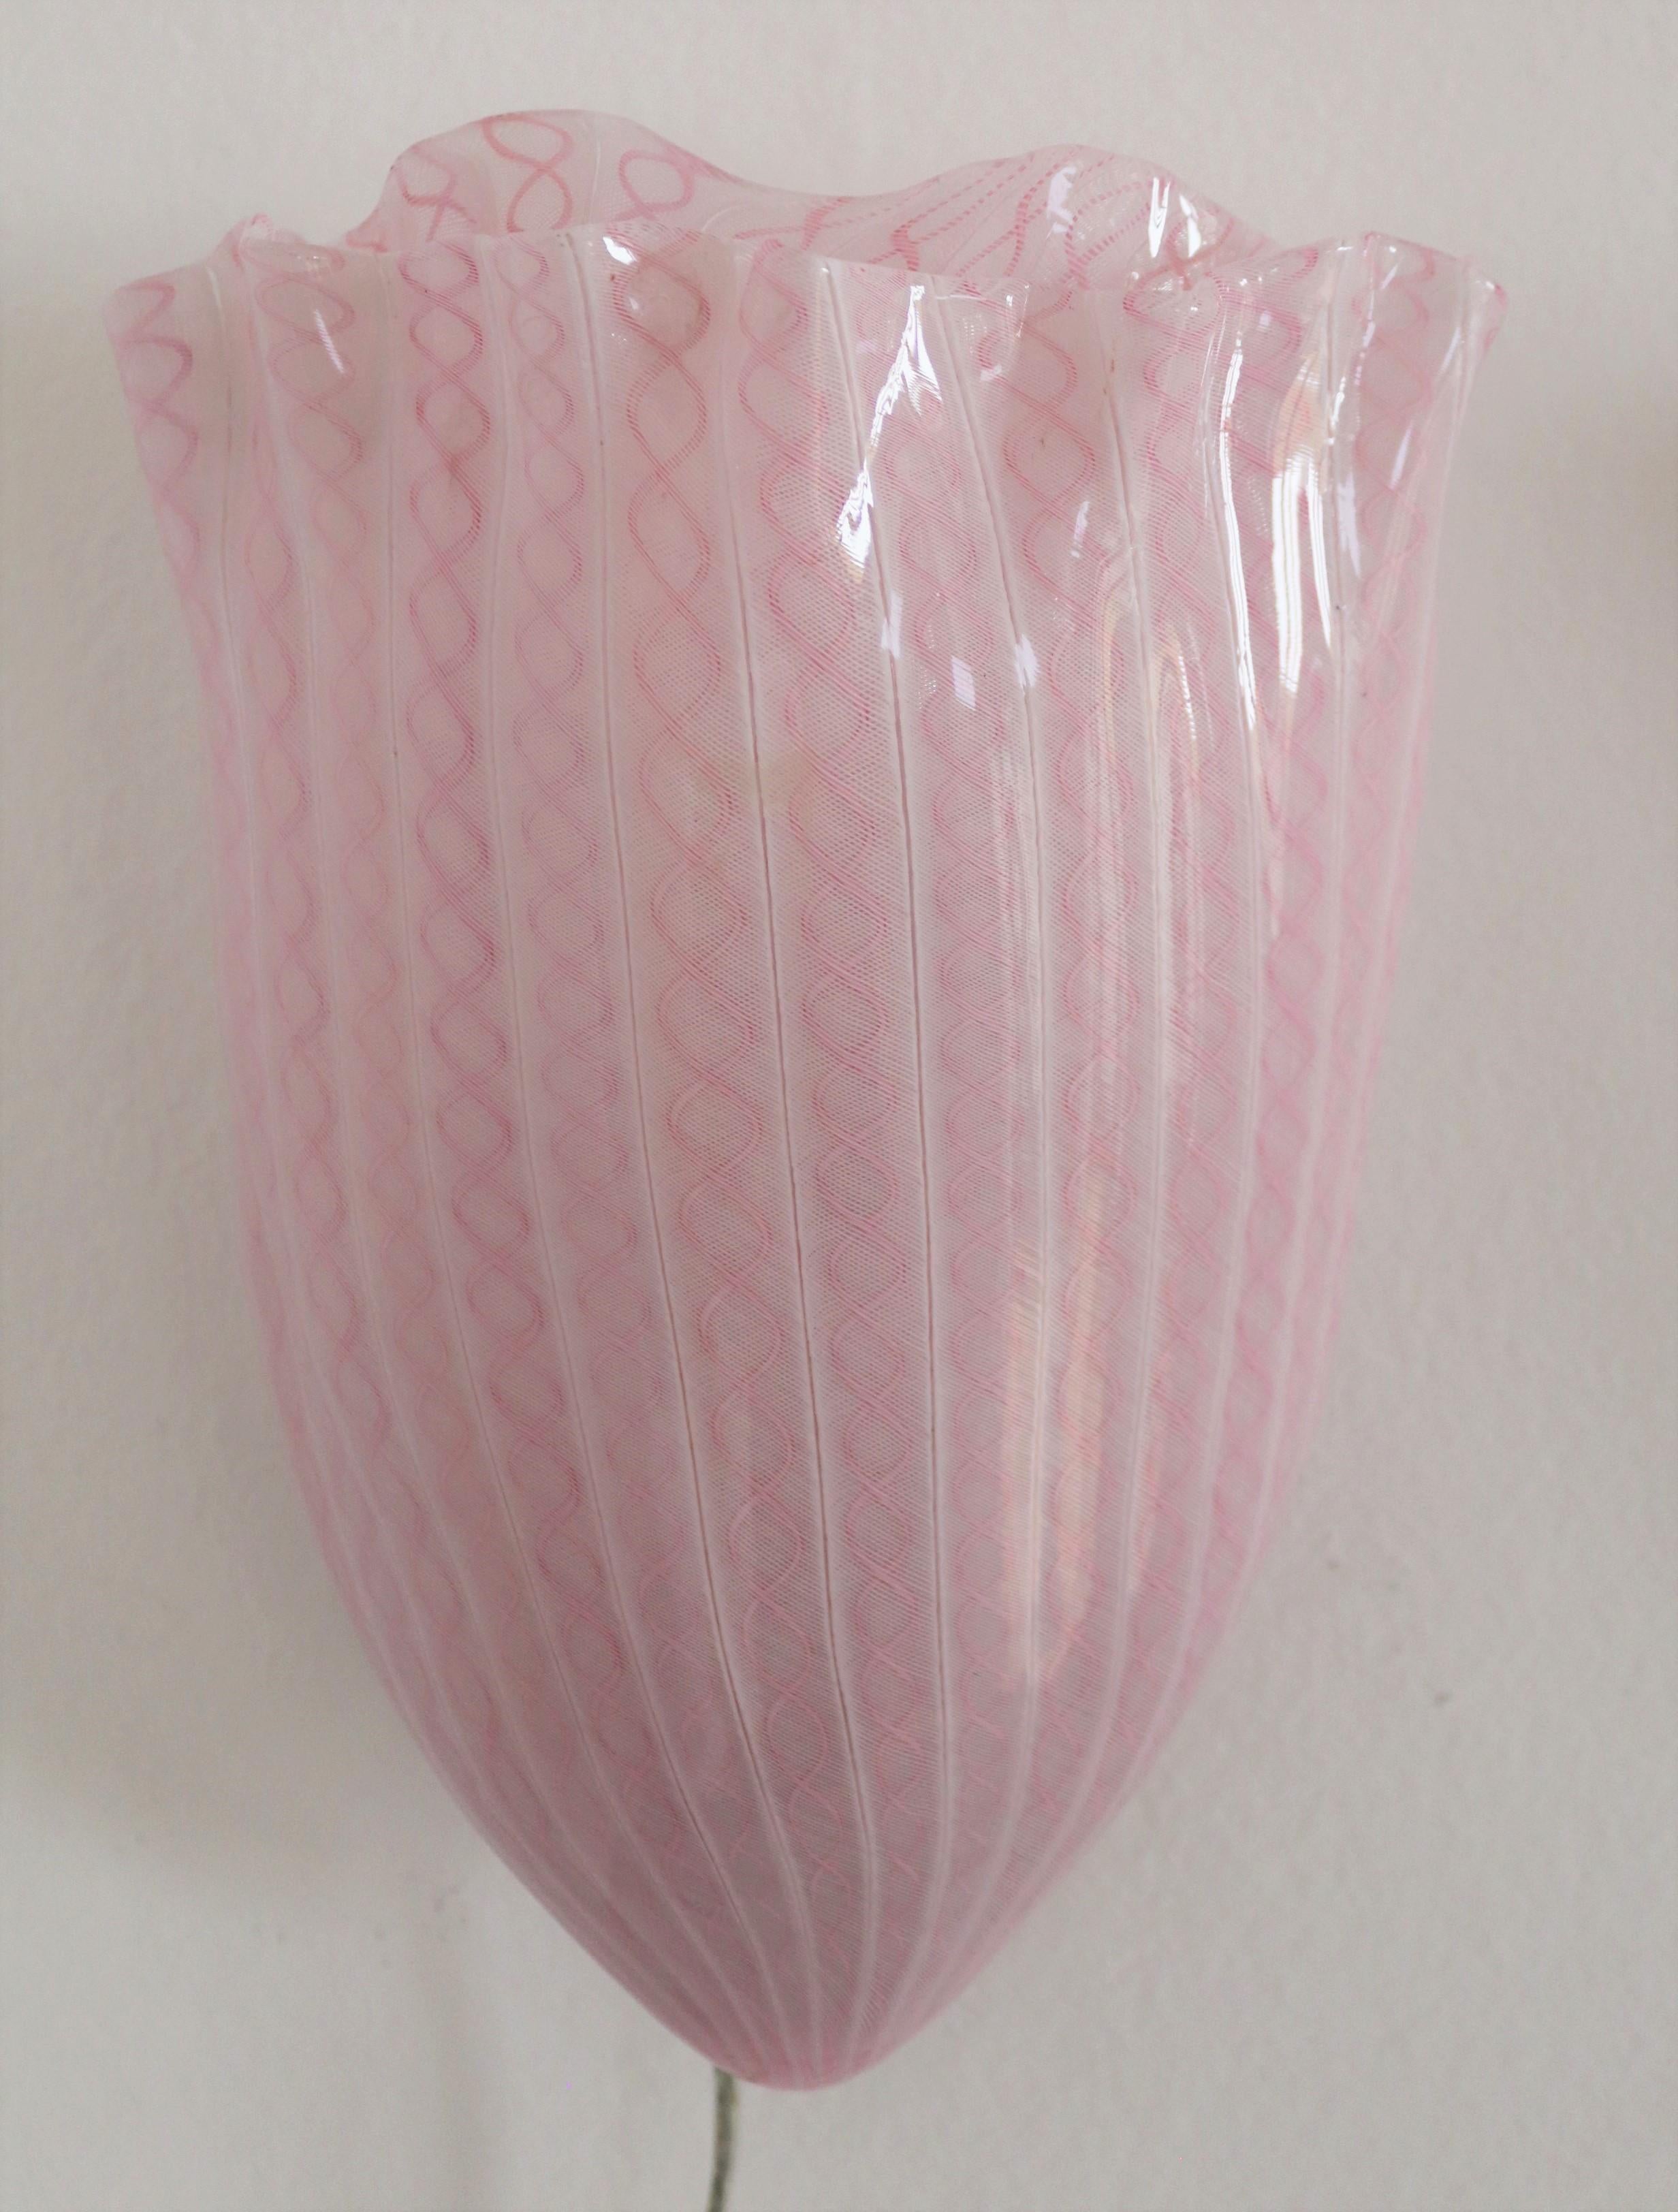 Fulvio Bianconi Venini Italian Midcentury Wall Sconces in Pink Murano Glass For Sale 11